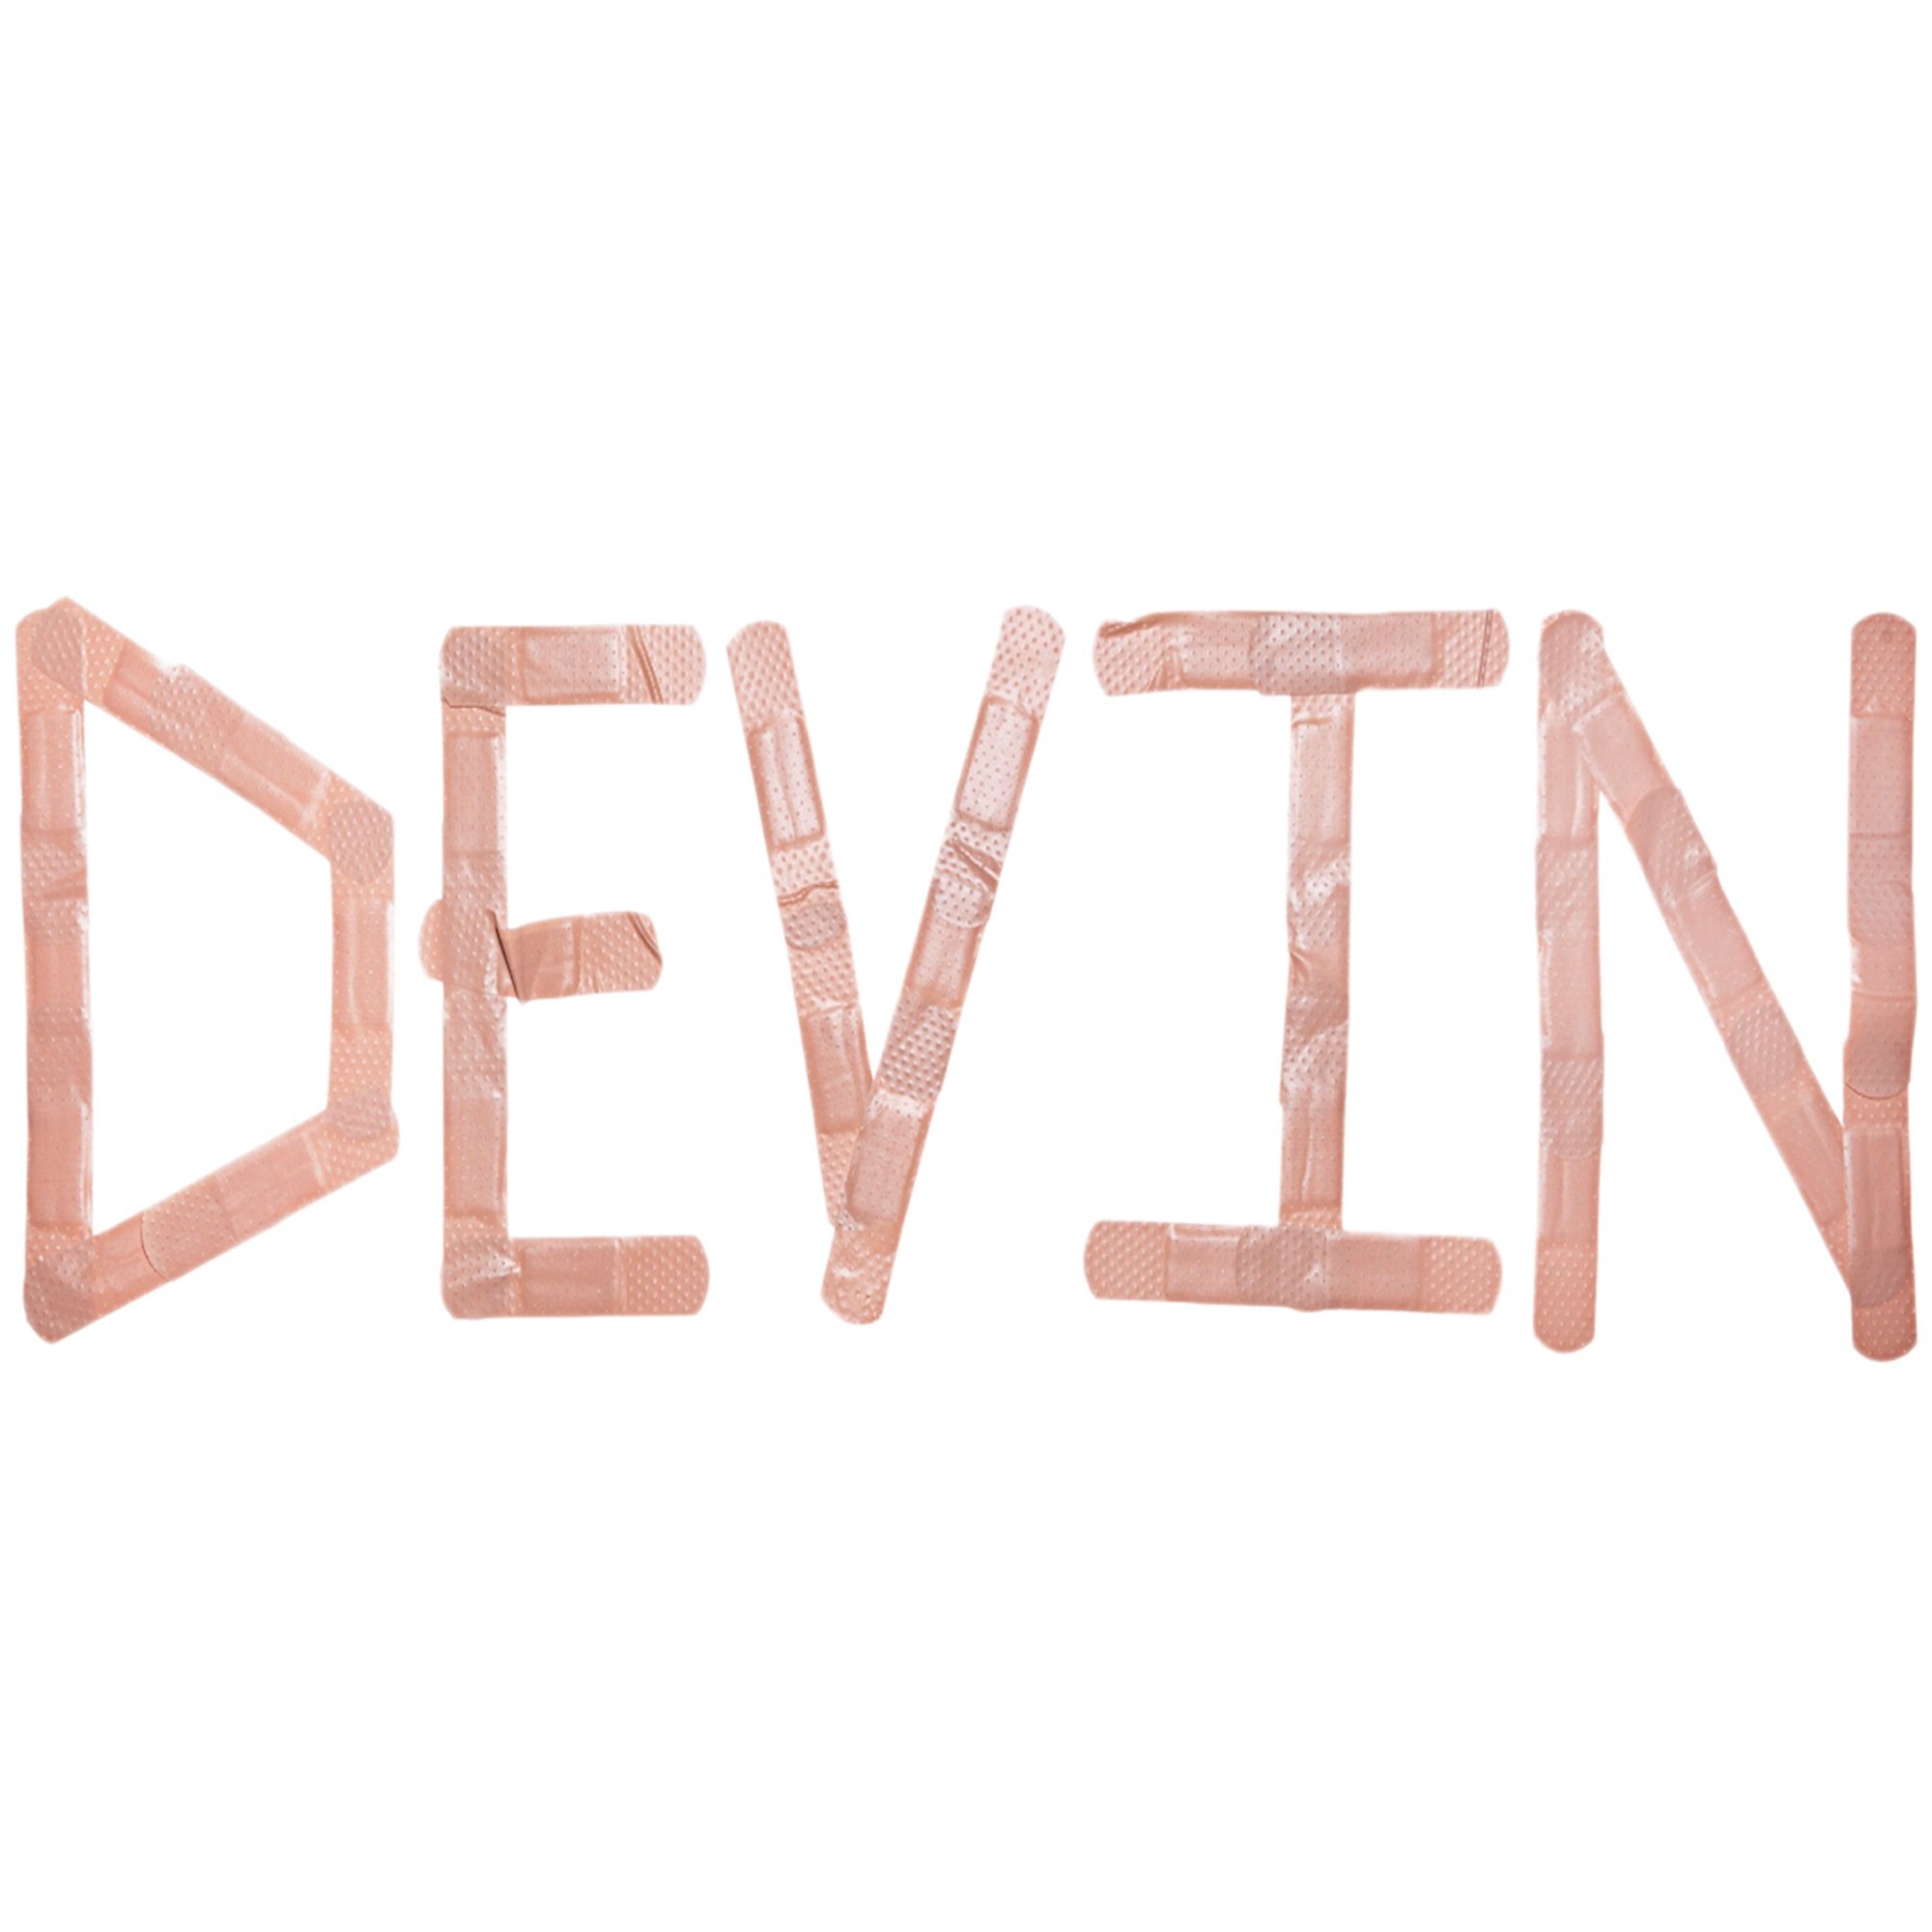 Pop Singer Devin Dygert fan page! Follow @DevinDygert for his official twitter.